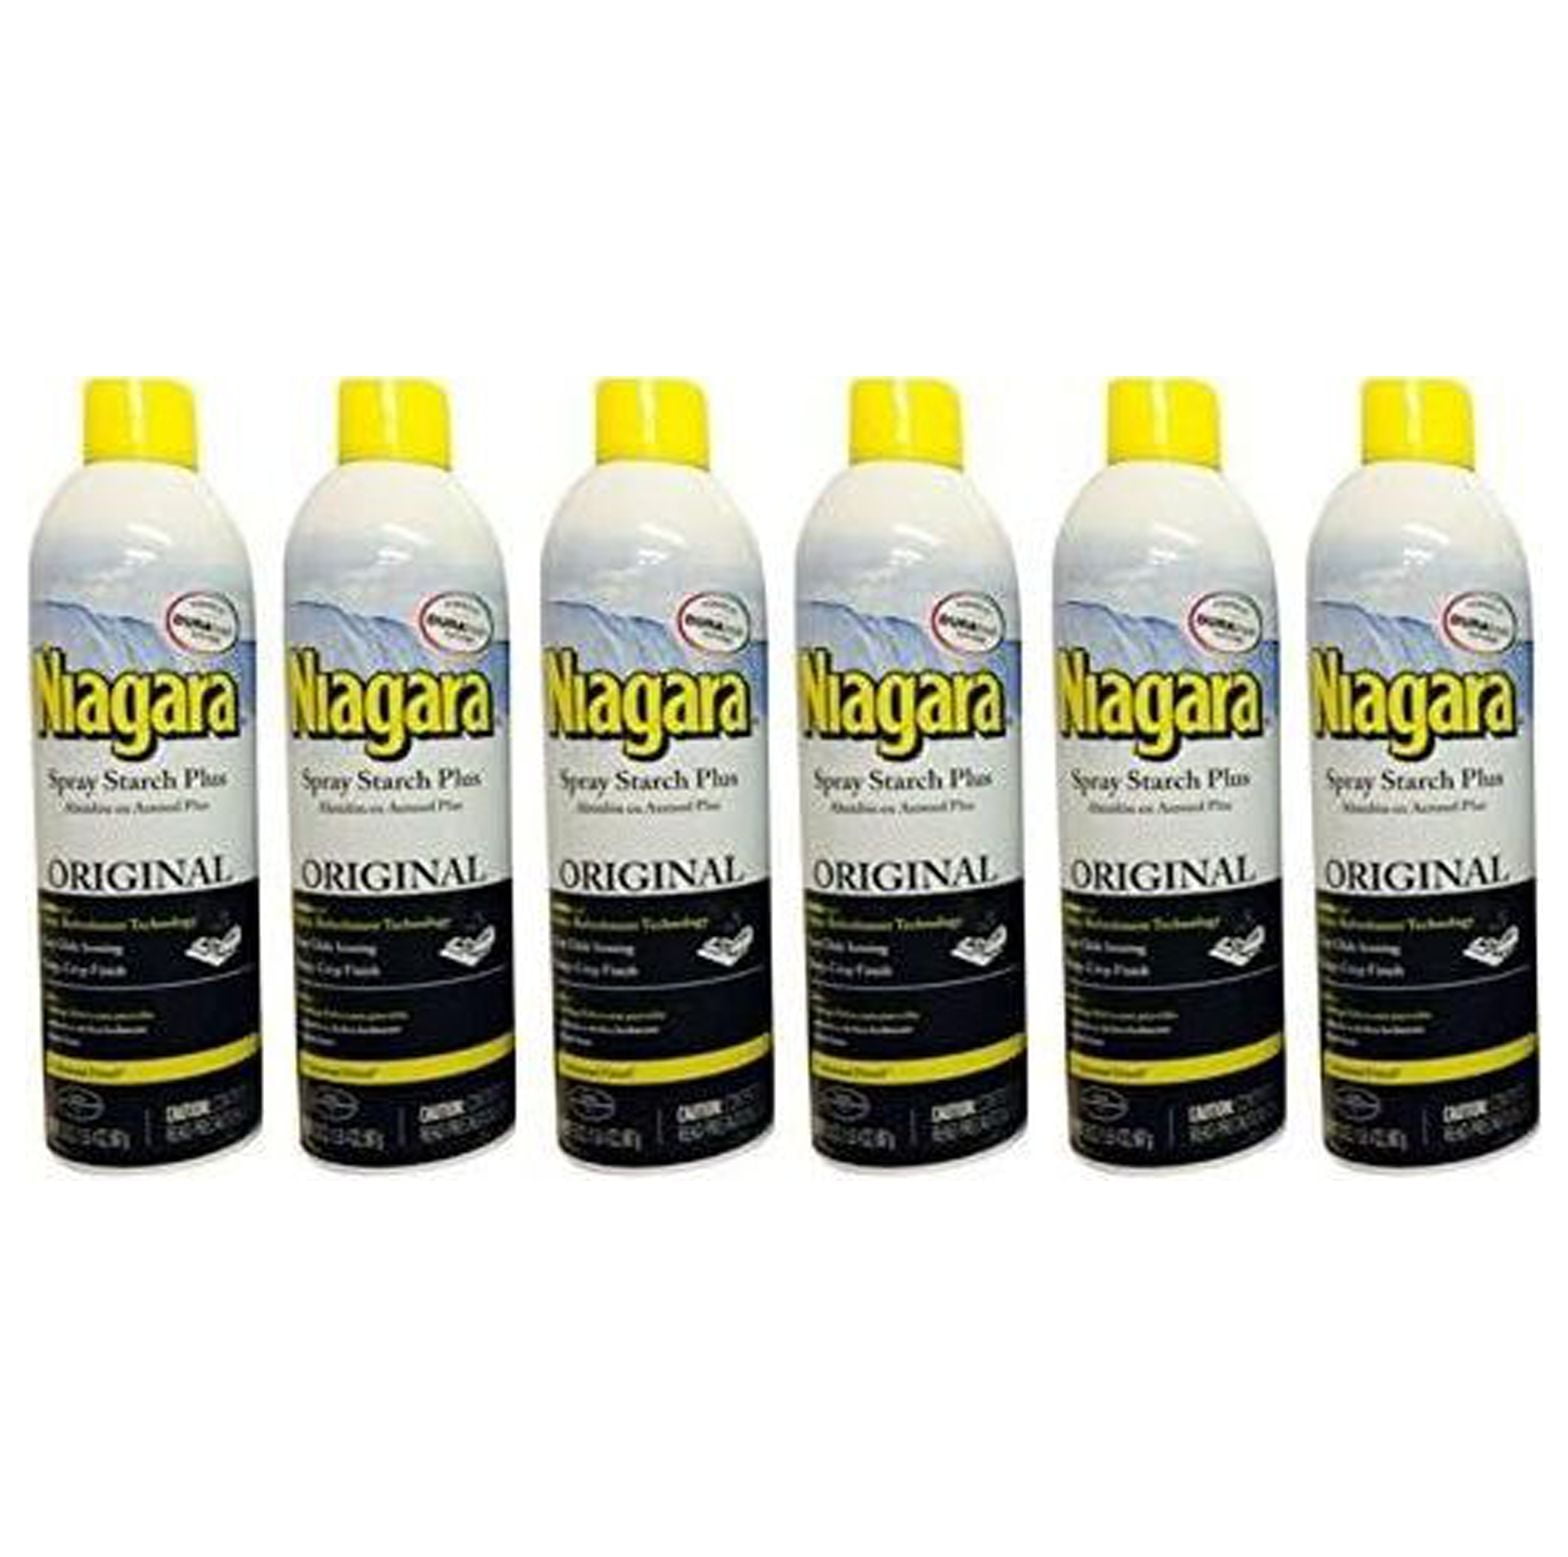 Spraynbond Fabric Stiffener Quick-Dry Pump Spray, Dries Clear